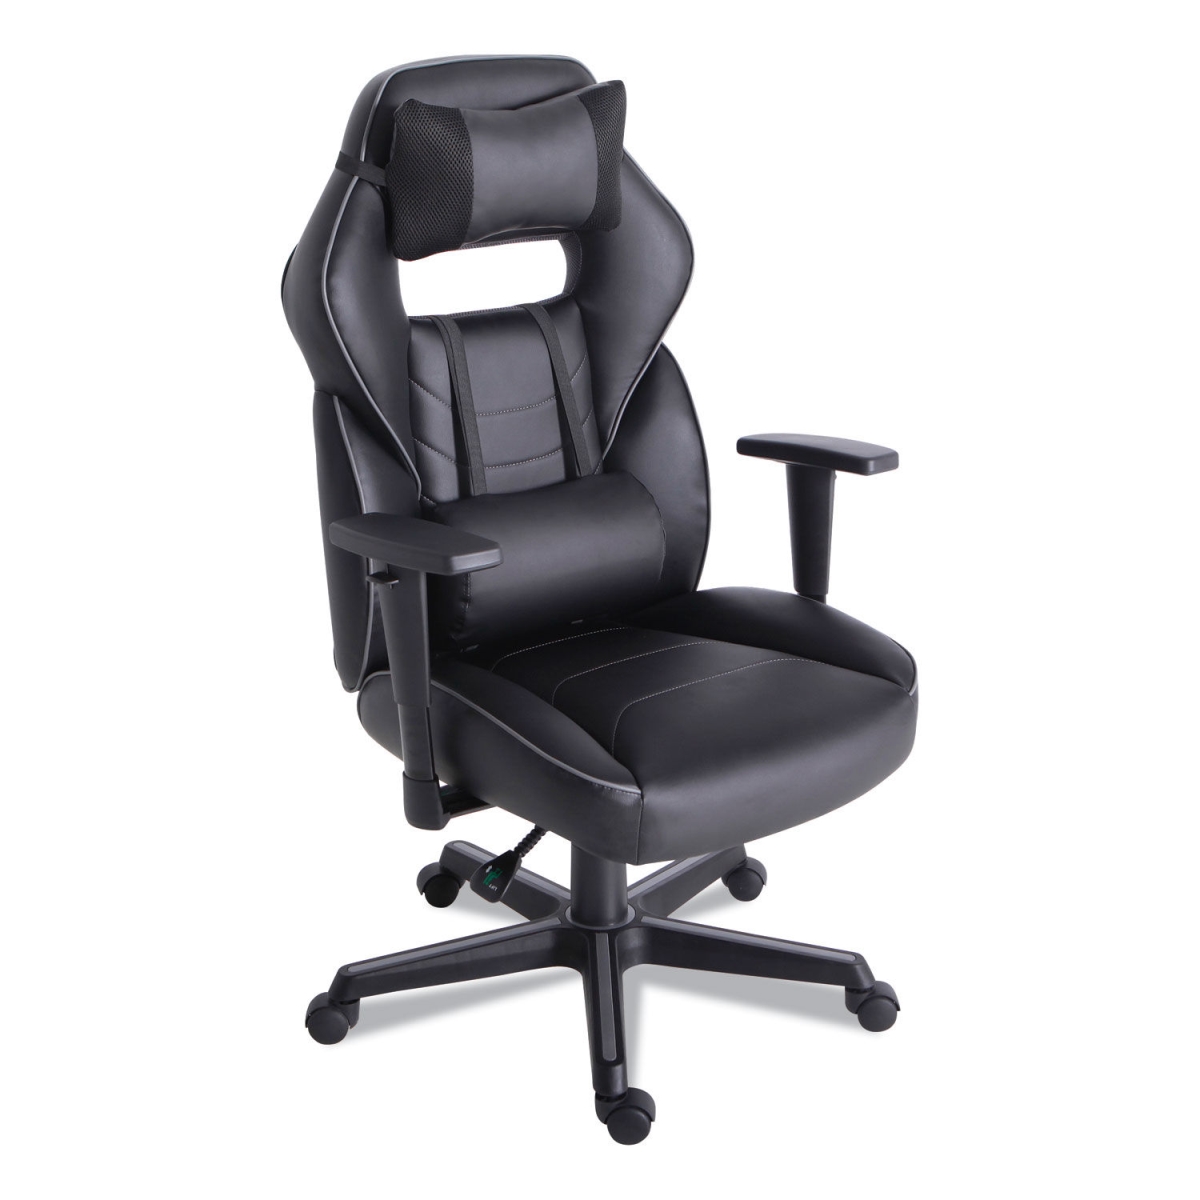 UPC 042167000042 product image for Alera ALEGM4146 Racing Style Ergonomic Gaming Chair, Black & Gray Trim - 15. | upcitemdb.com